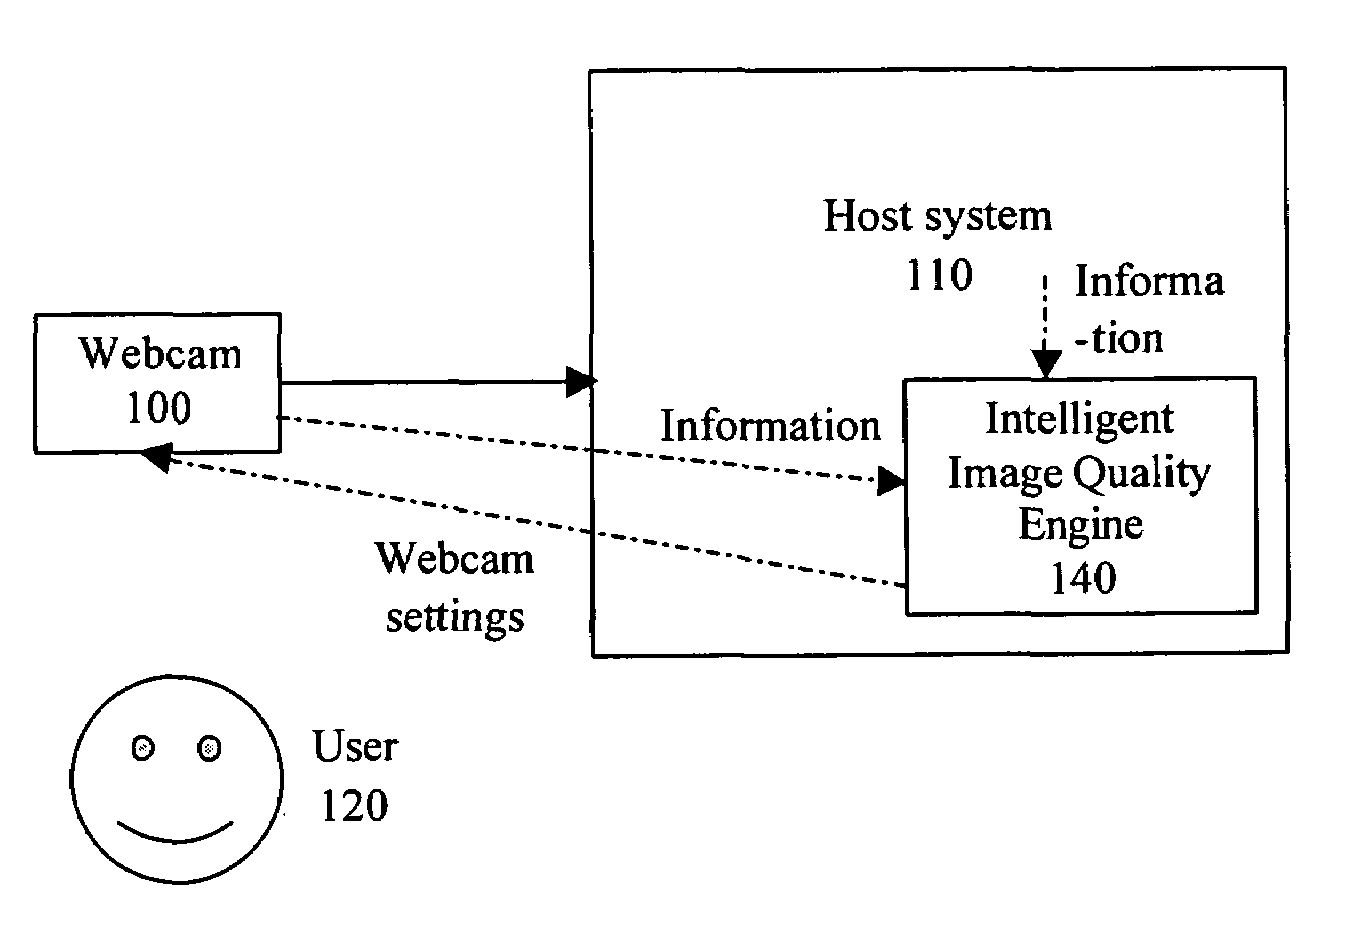 Intelligent image quality engine